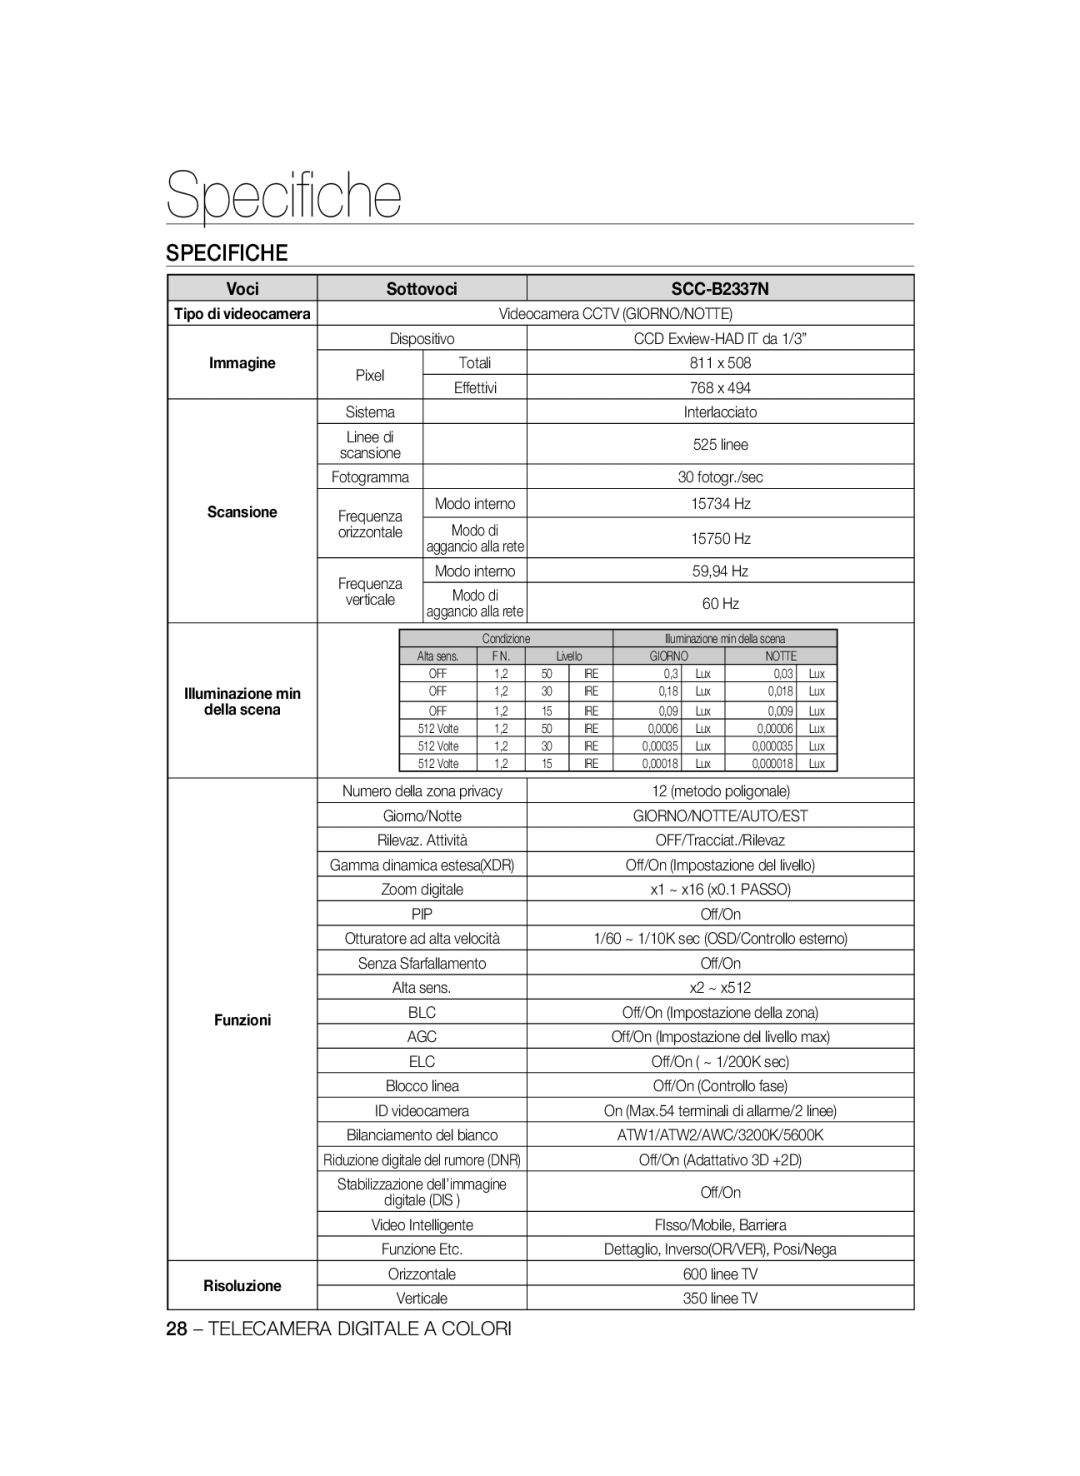 Samsung SCC-B2337P, SCC-B2037P manual Speciﬁche, Specifiche, Voci, SCC-B2337N, Immagine, della scena 